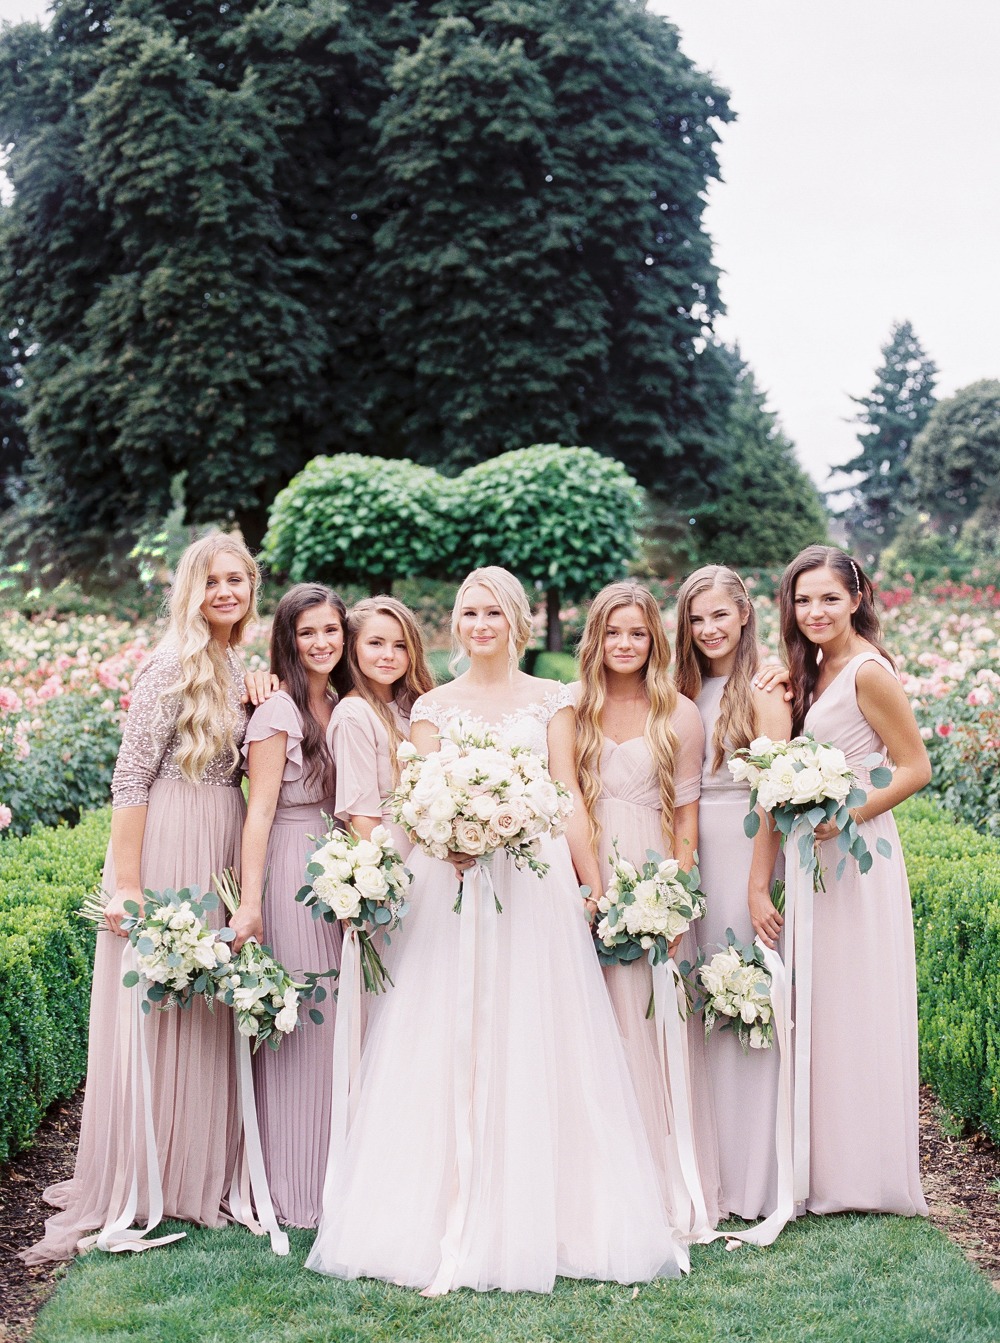 Bridesmaids in mismatched blush dresses